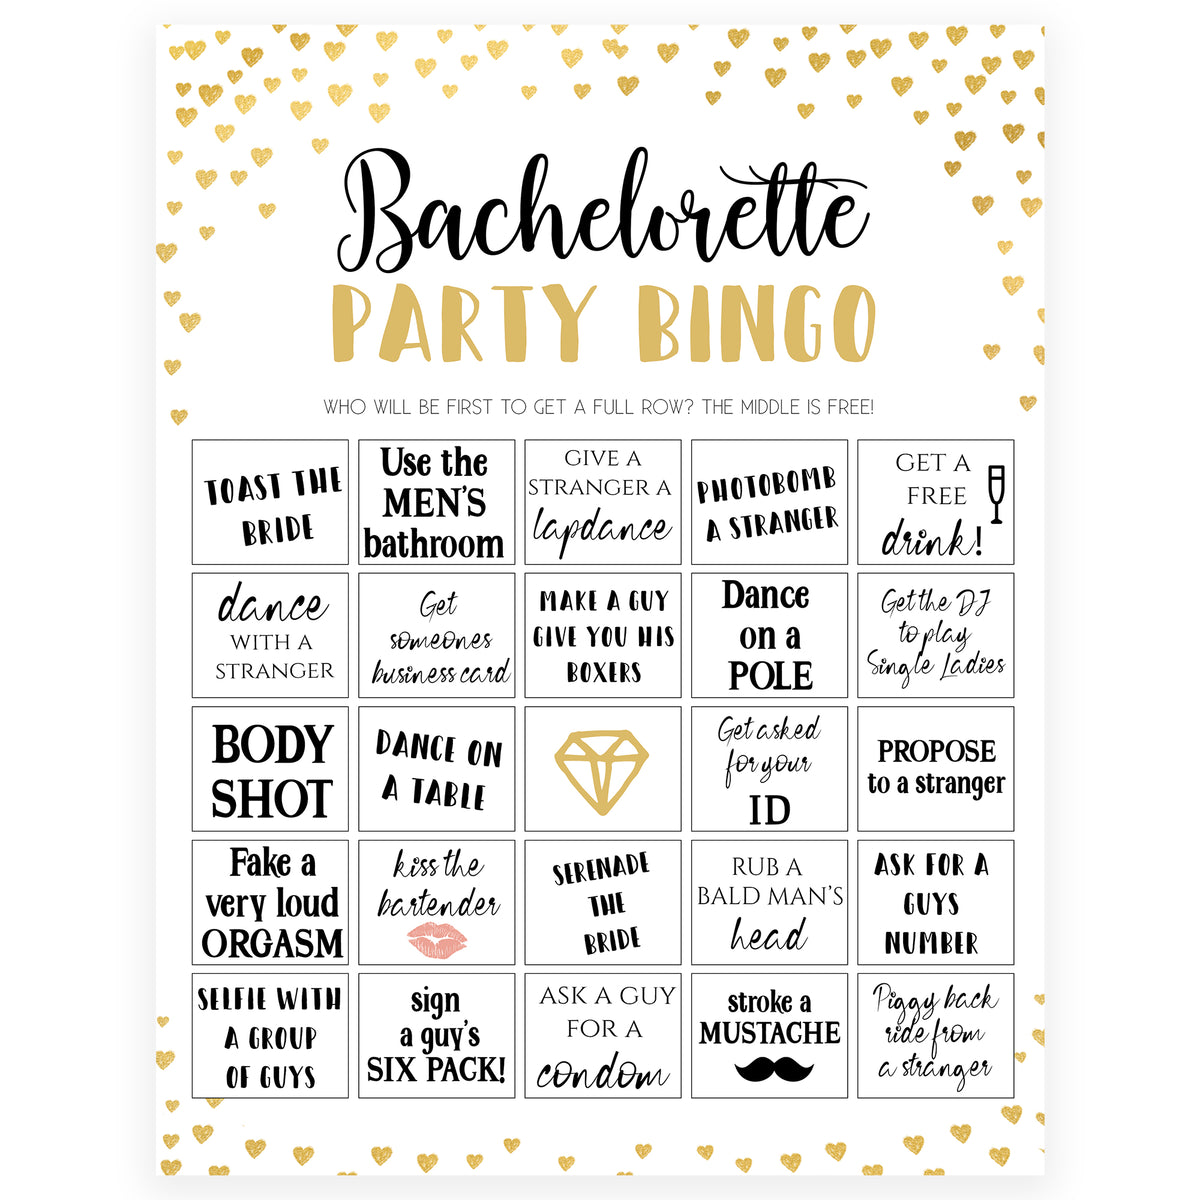 Free Bachelorette Party Games Printable